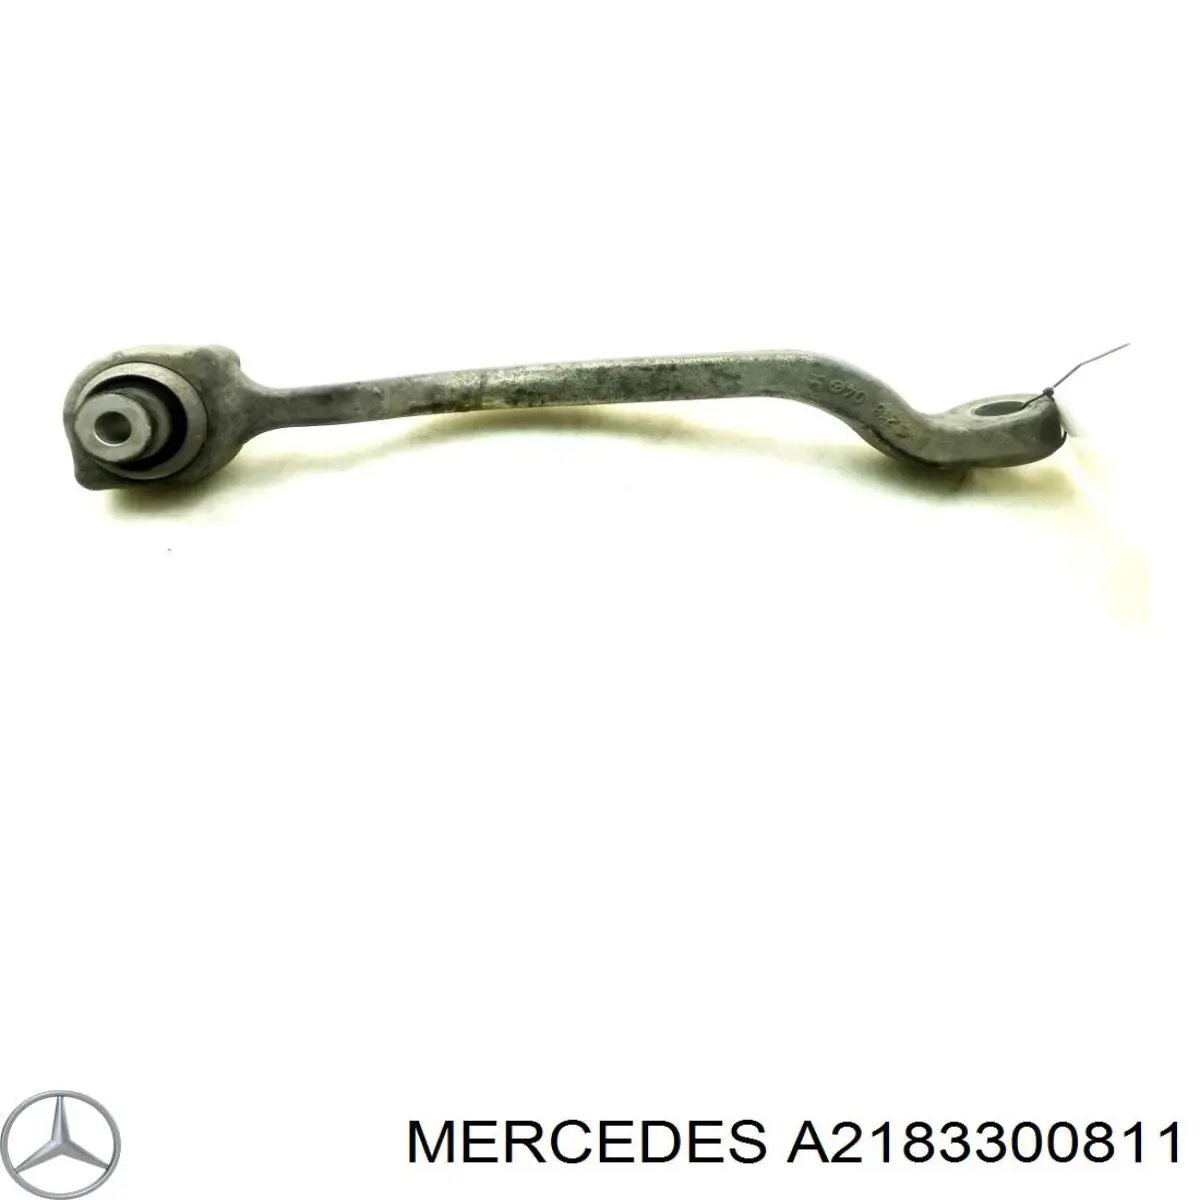 A2183300811 Mercedes barra oscilante, suspensión de ruedas delantera, inferior derecha